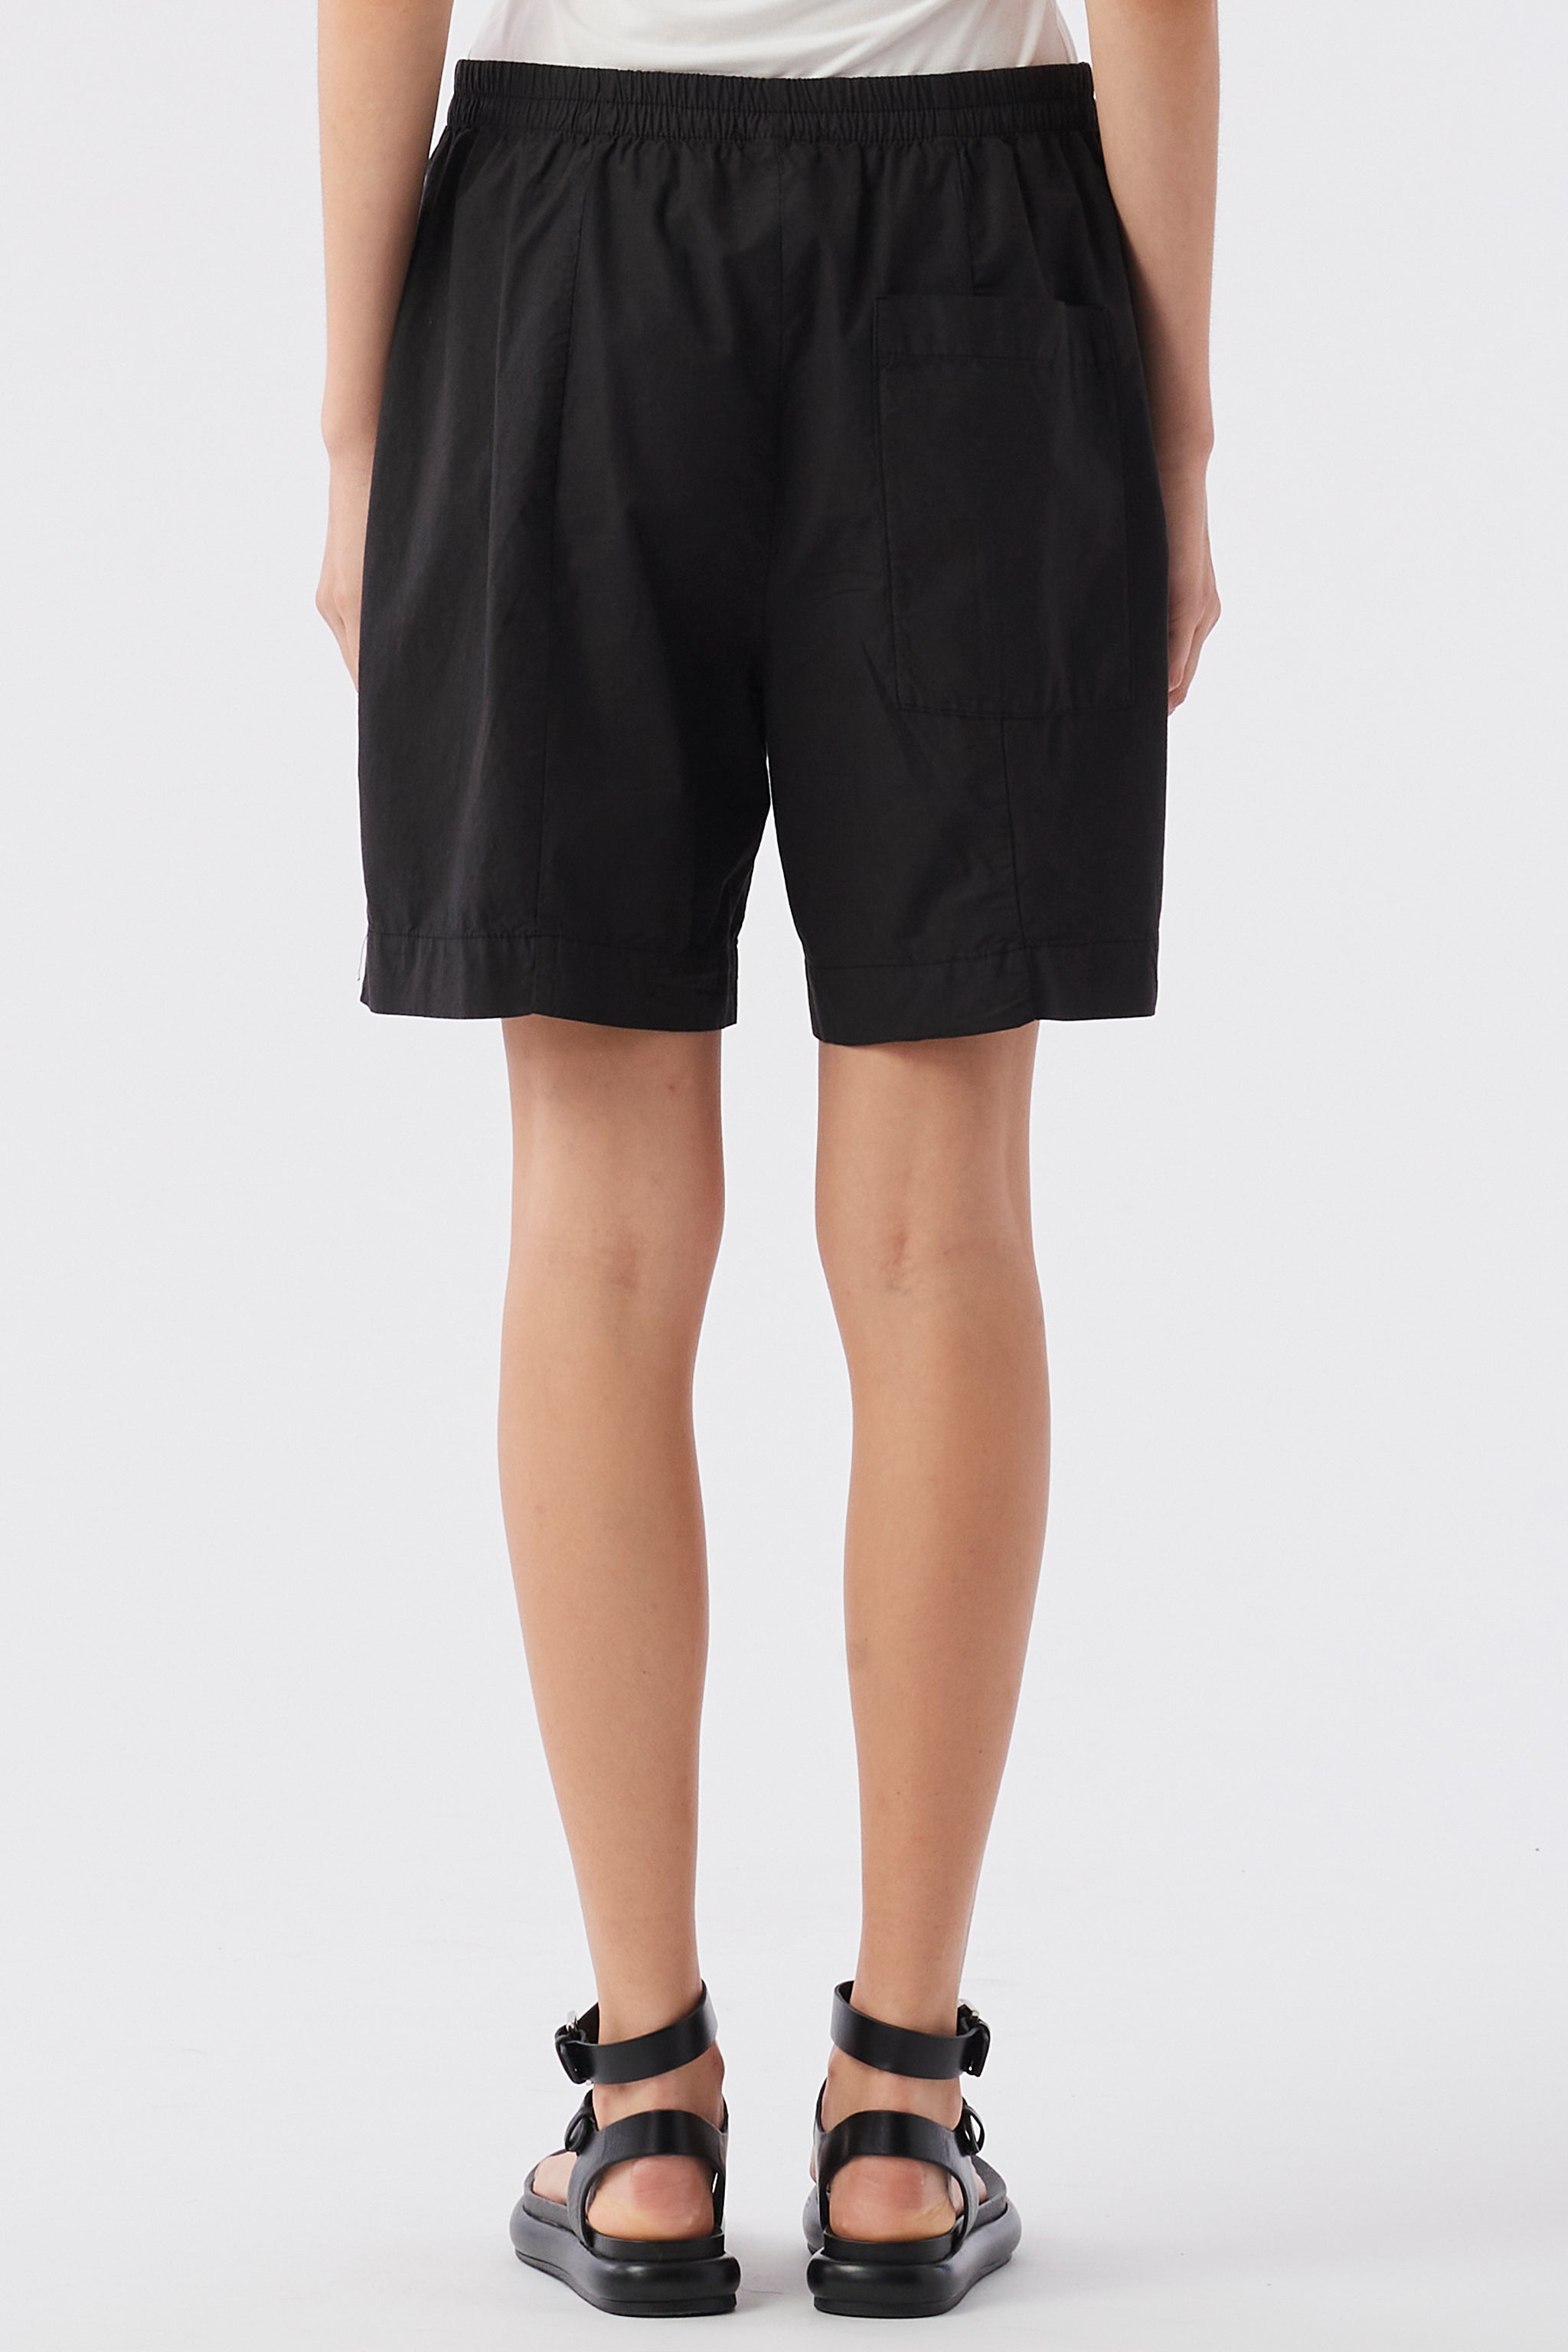 TRANSIT - Black Cotton Shorts